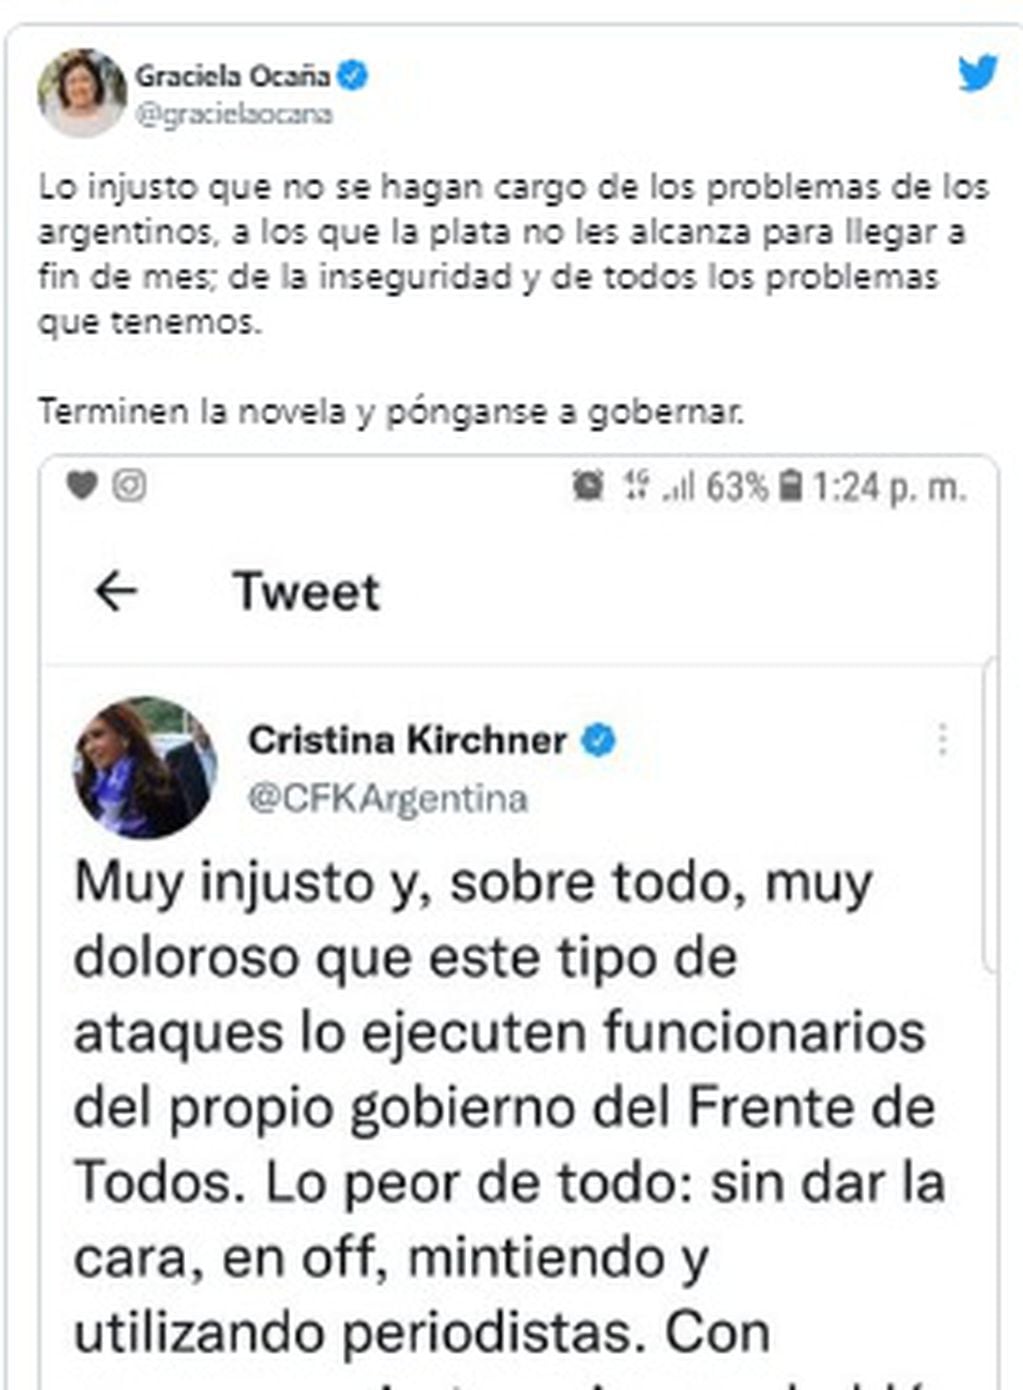 El tuit de Graciela Ocaña.